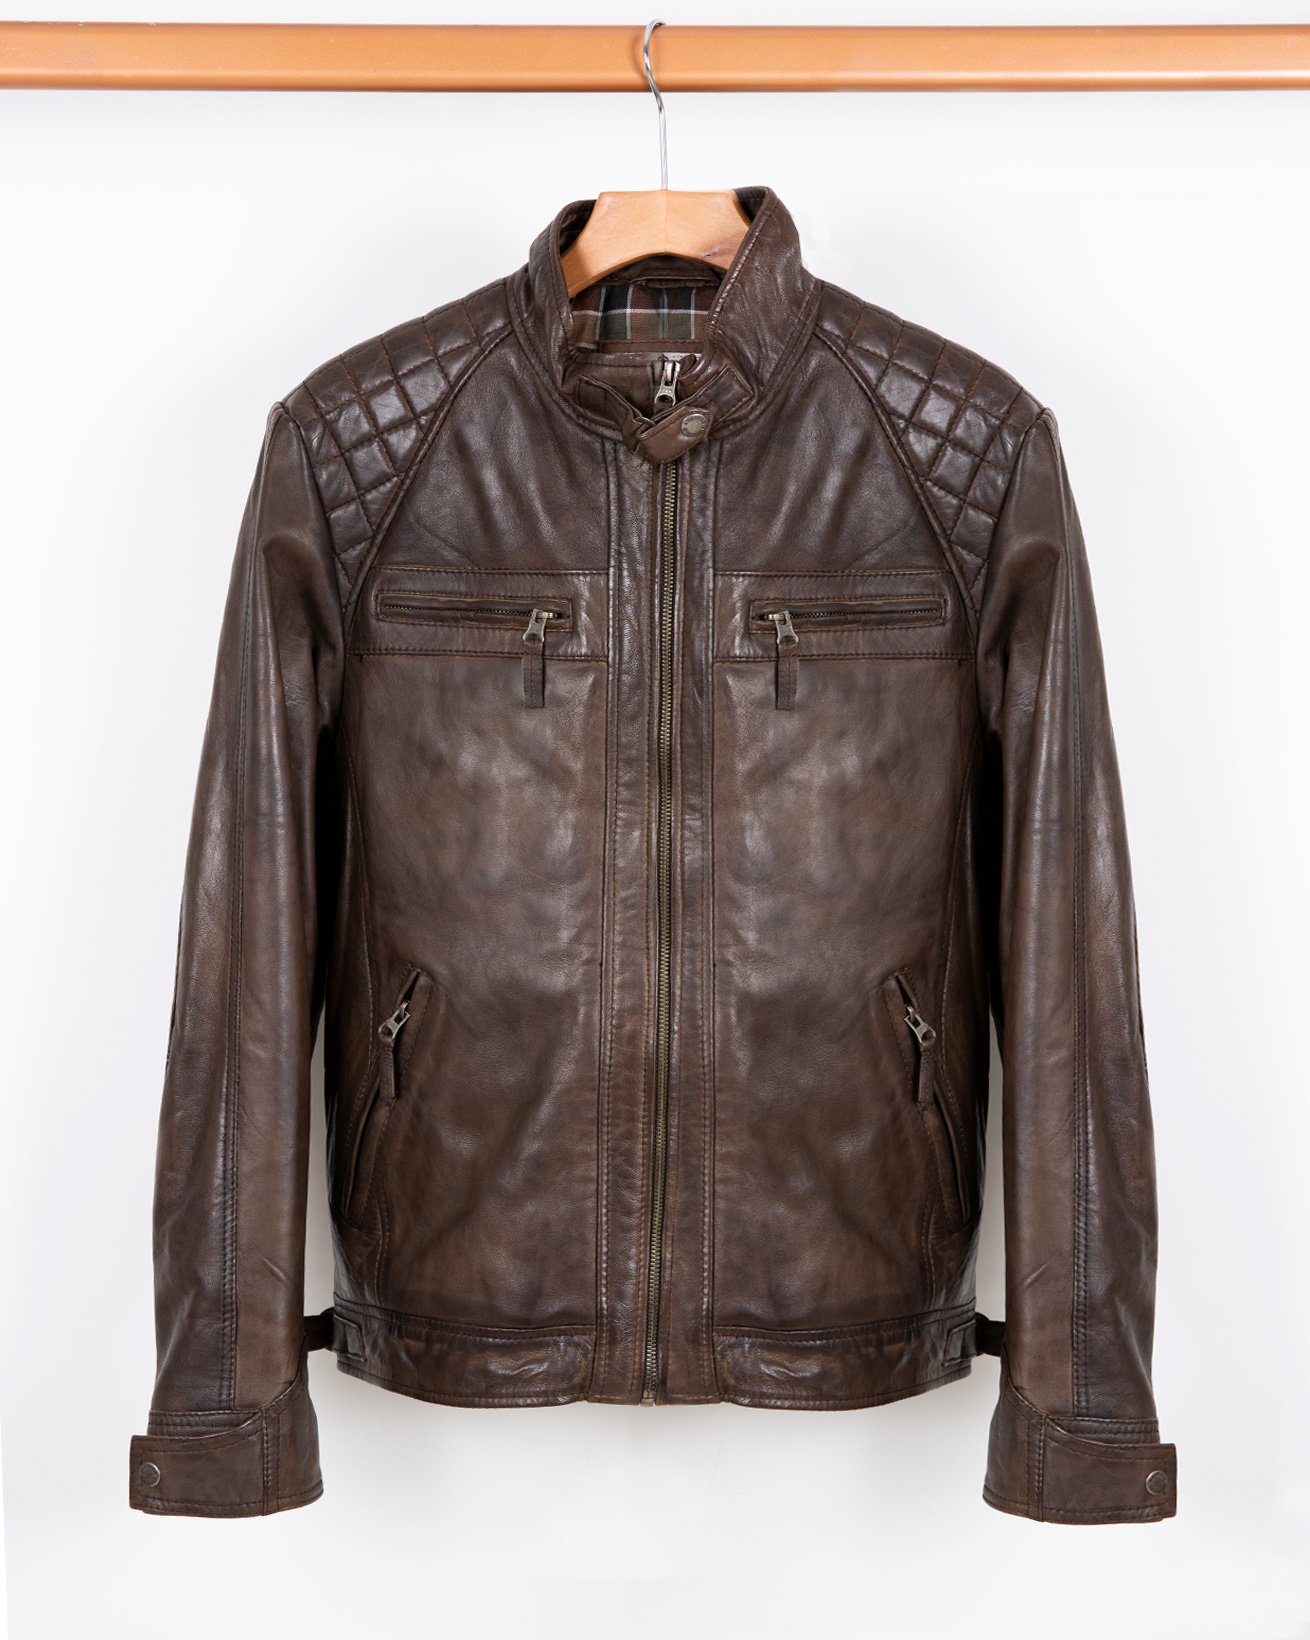 7263-lfs-mens biker jacket.jpg